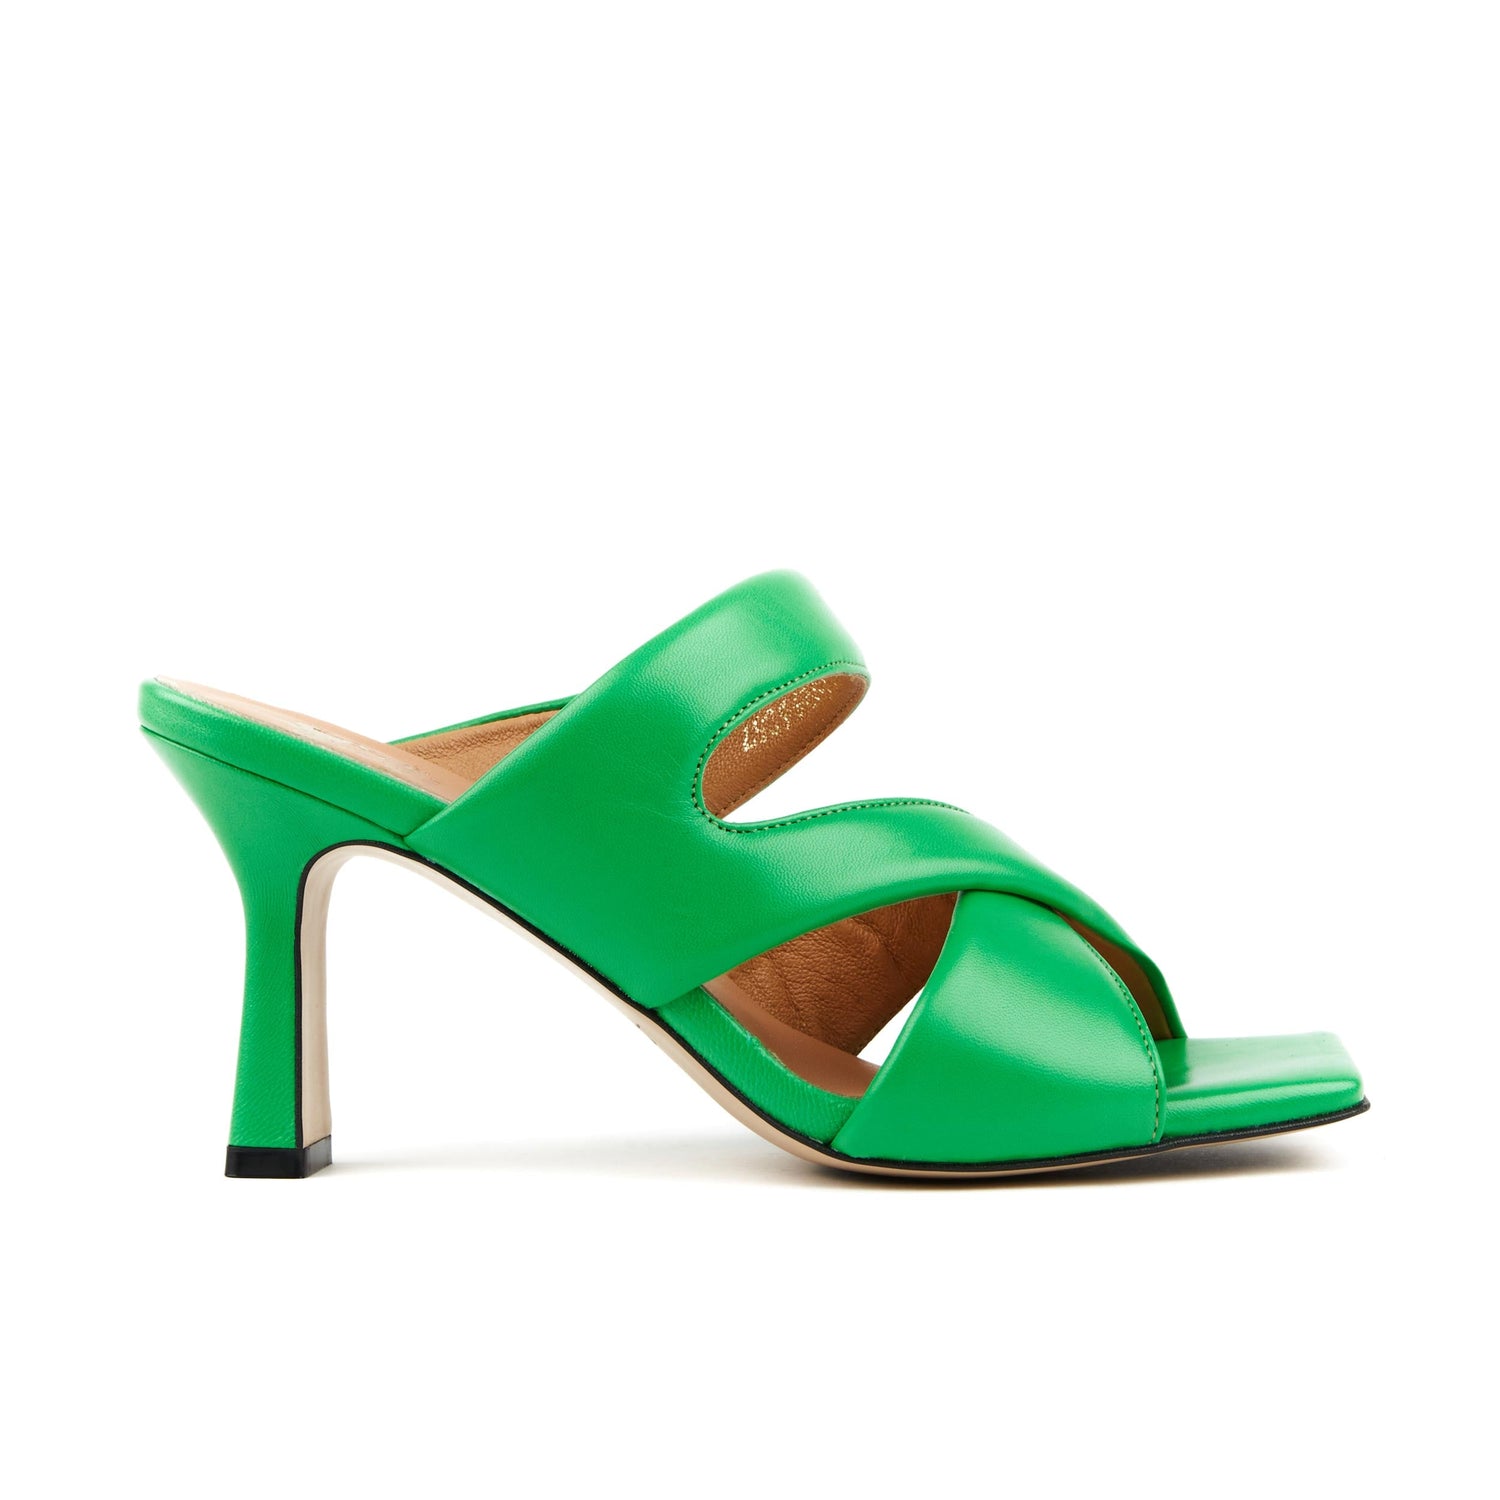 Oriana - Bright Green Heels Embassy London 